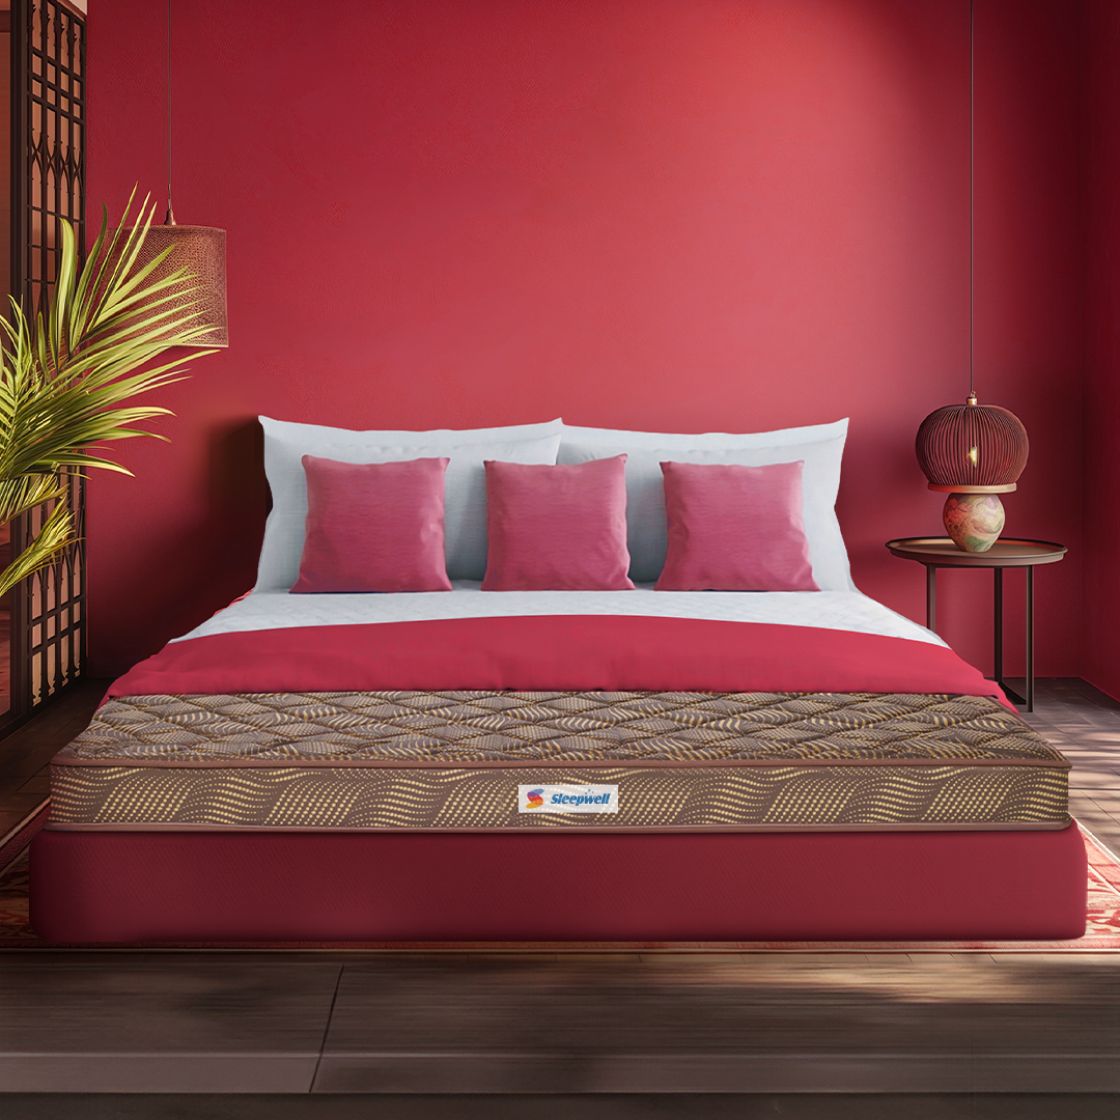 Sleepwell  Champ-Superior PU Foam | 5-inch King Bed Size | Medium Firm | Anti Sag Tech Mattress (Brown, 72x48x5)